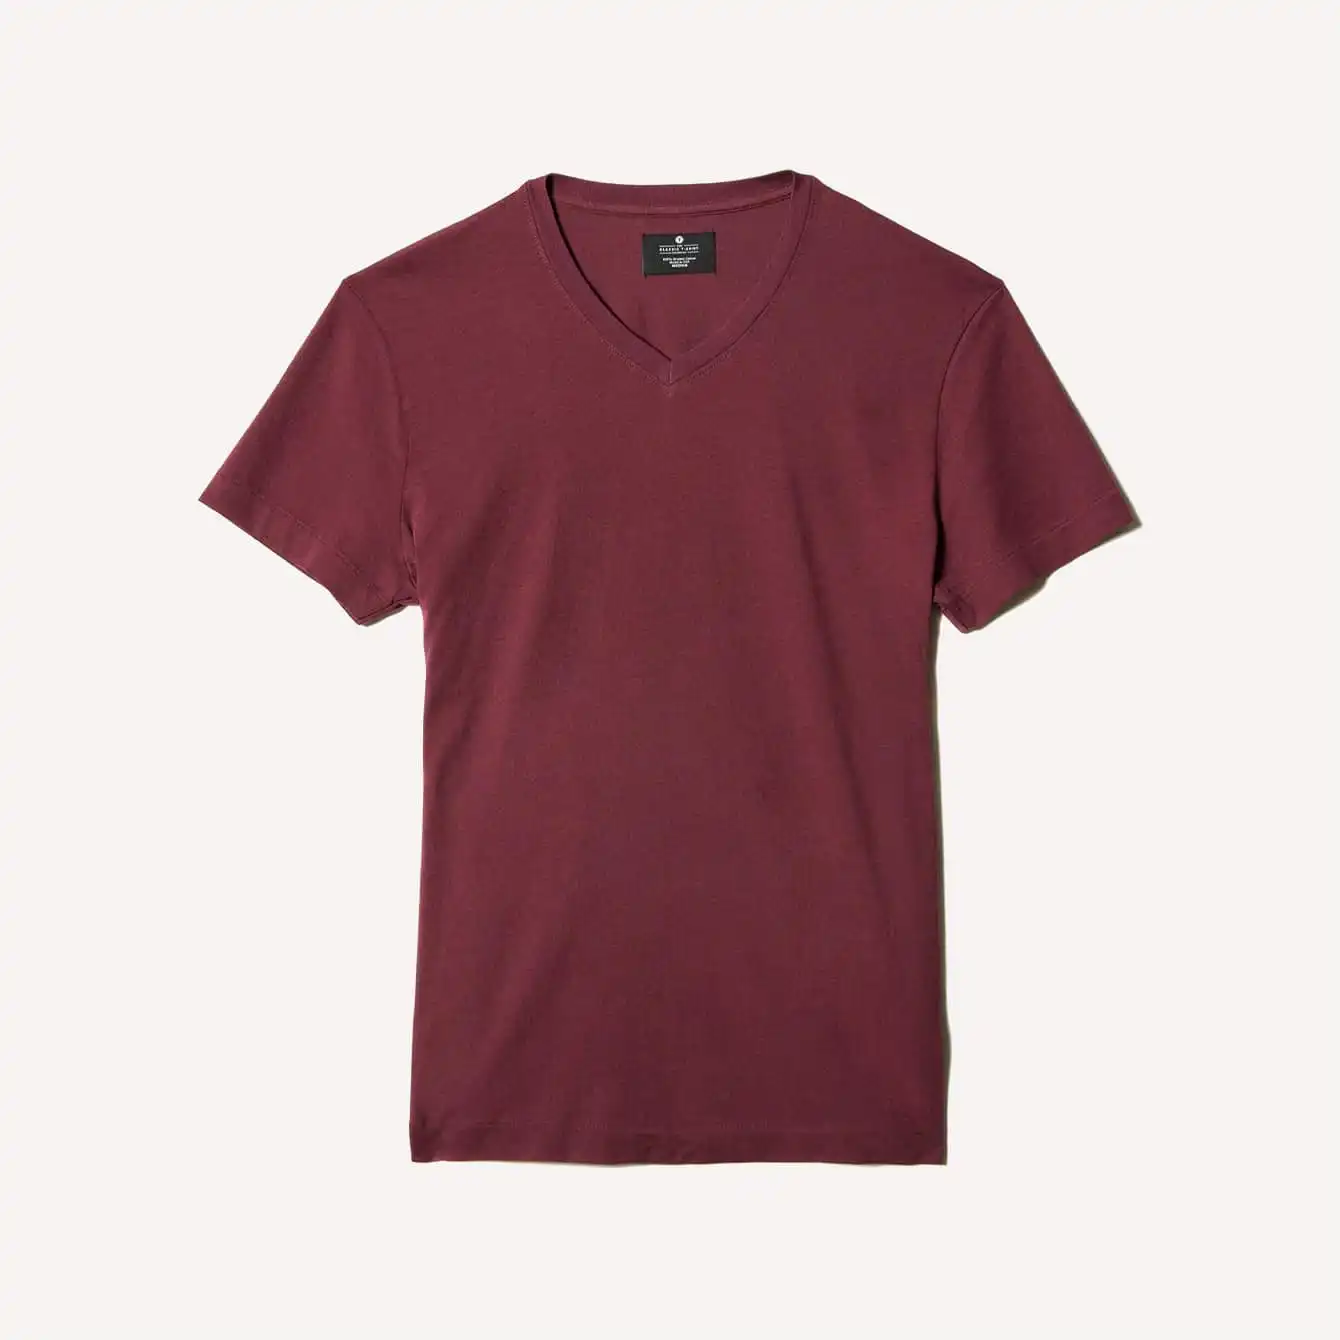 The Classic T-Shirt Company  – Mens Short Sleeve V-neck Classic T-Shirt